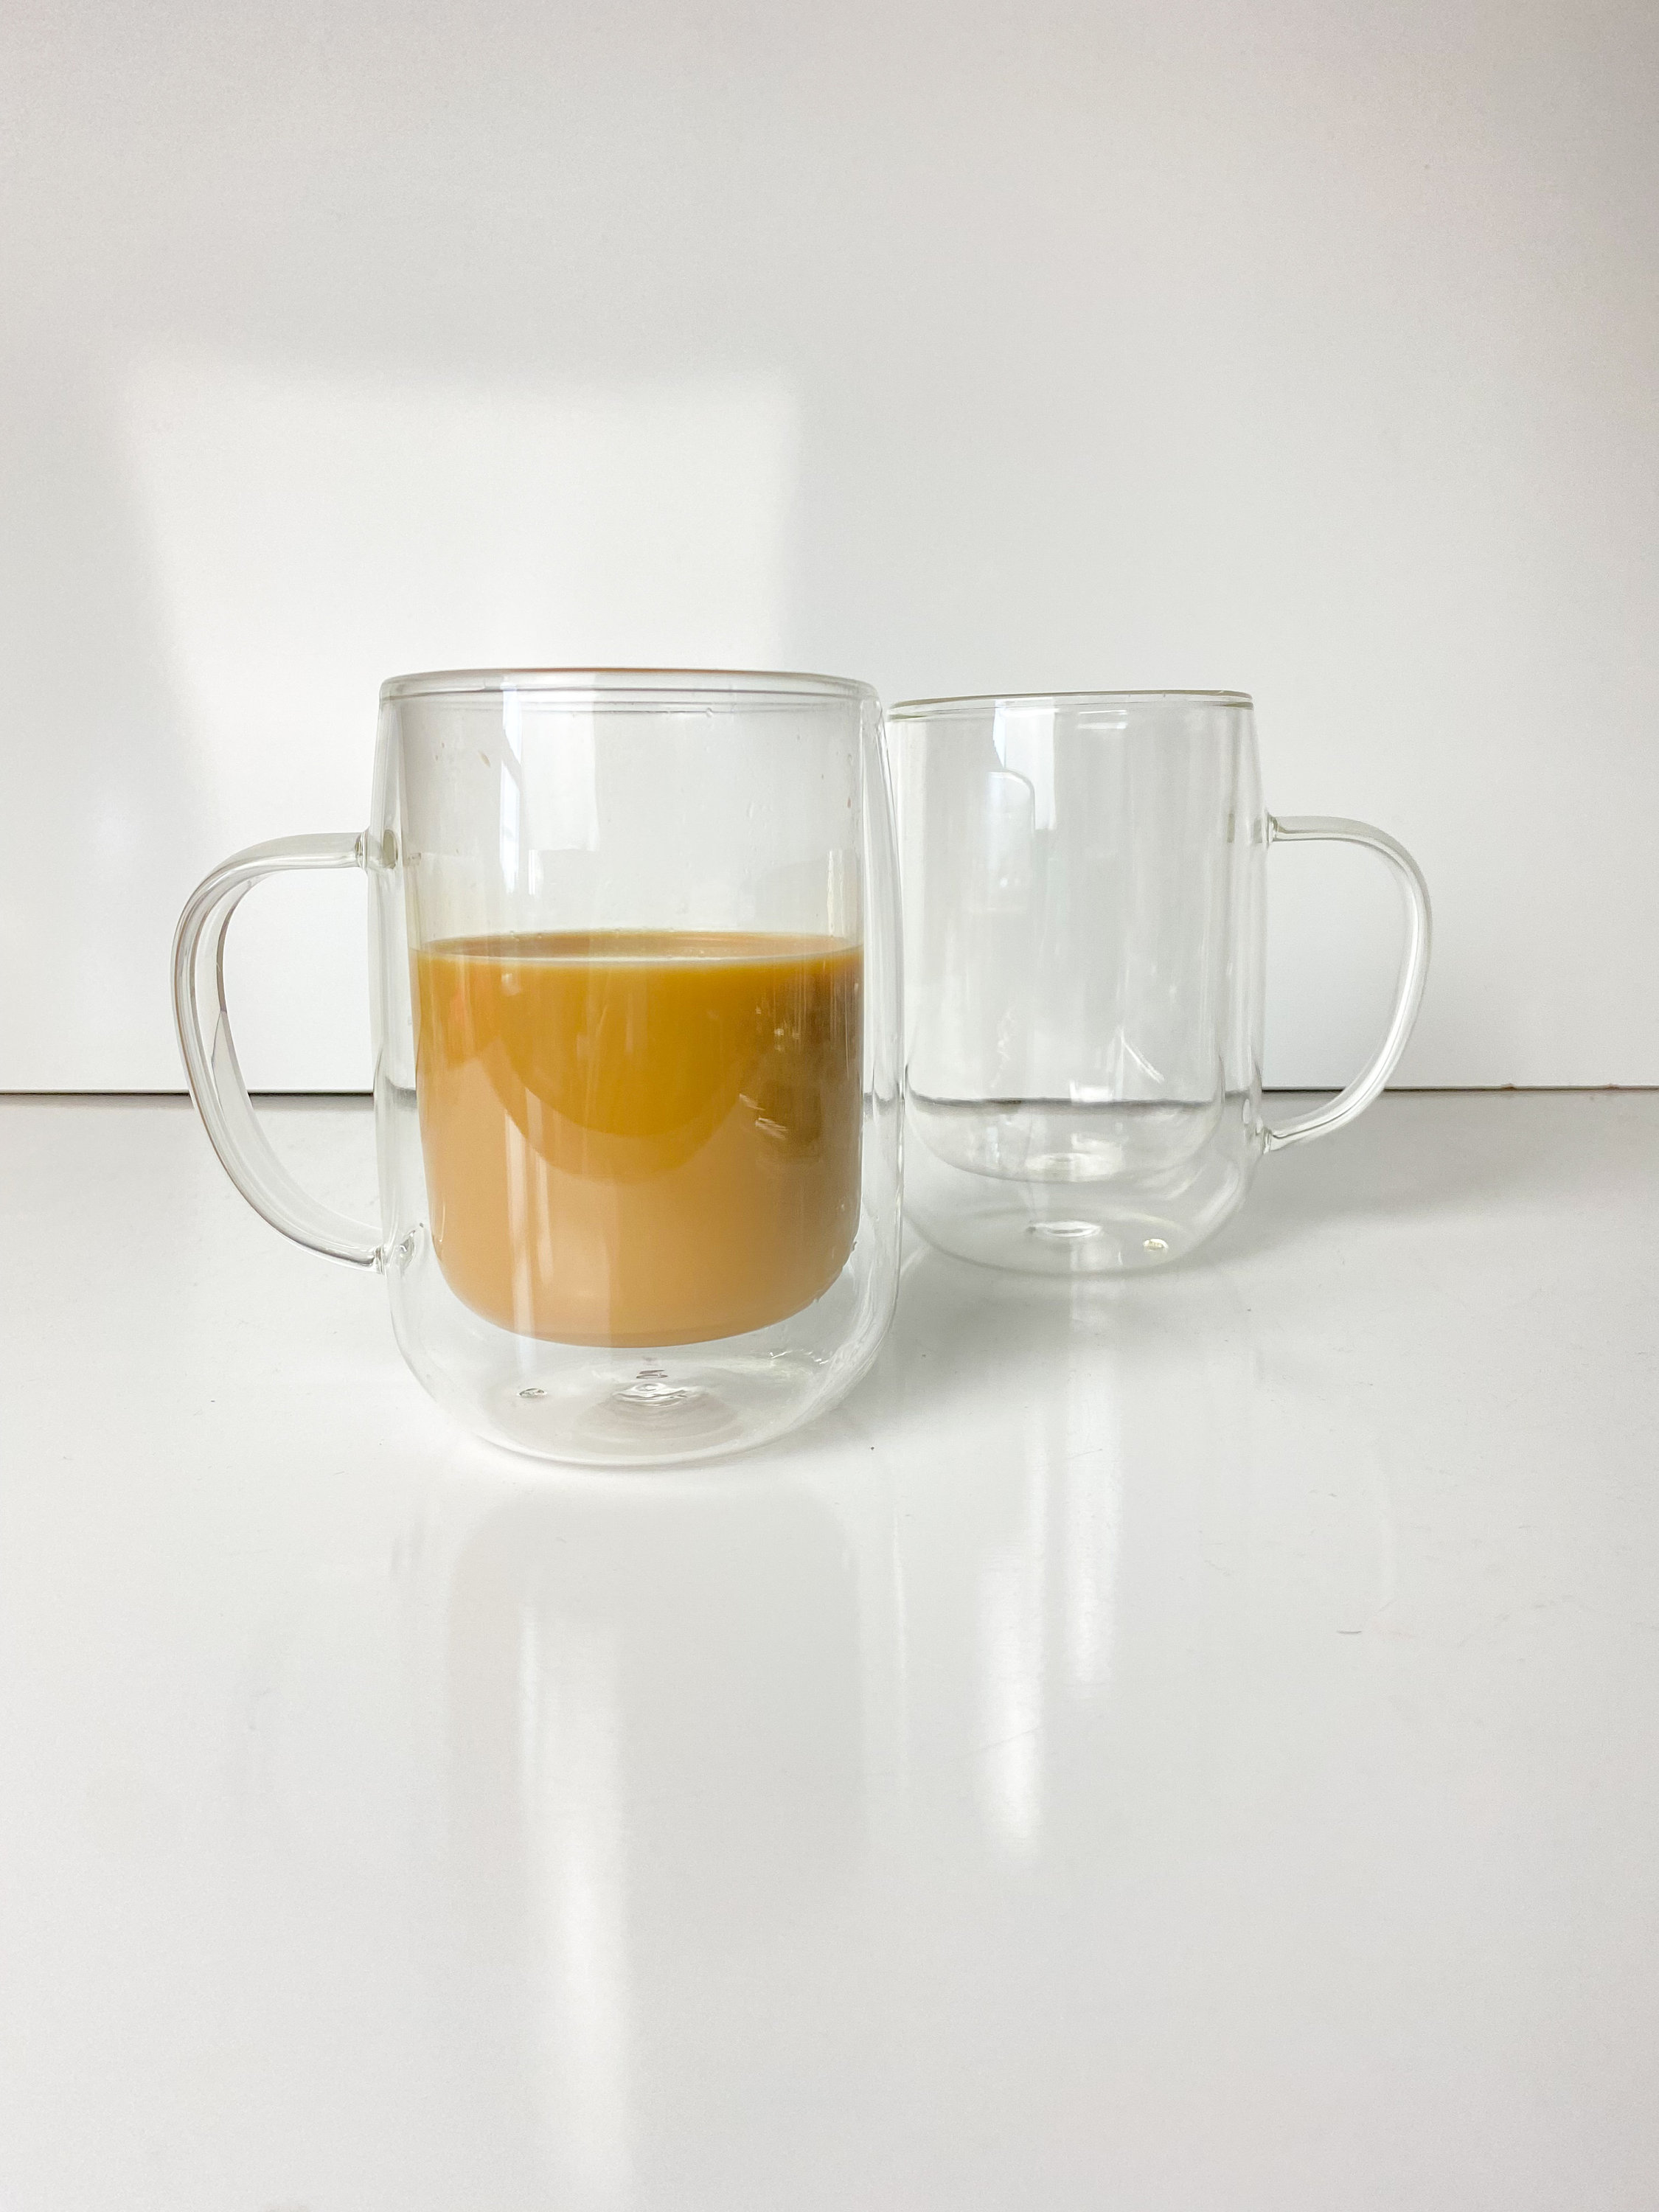 Bodum Bistro Double Wall Coffee Mug Set - 10oz